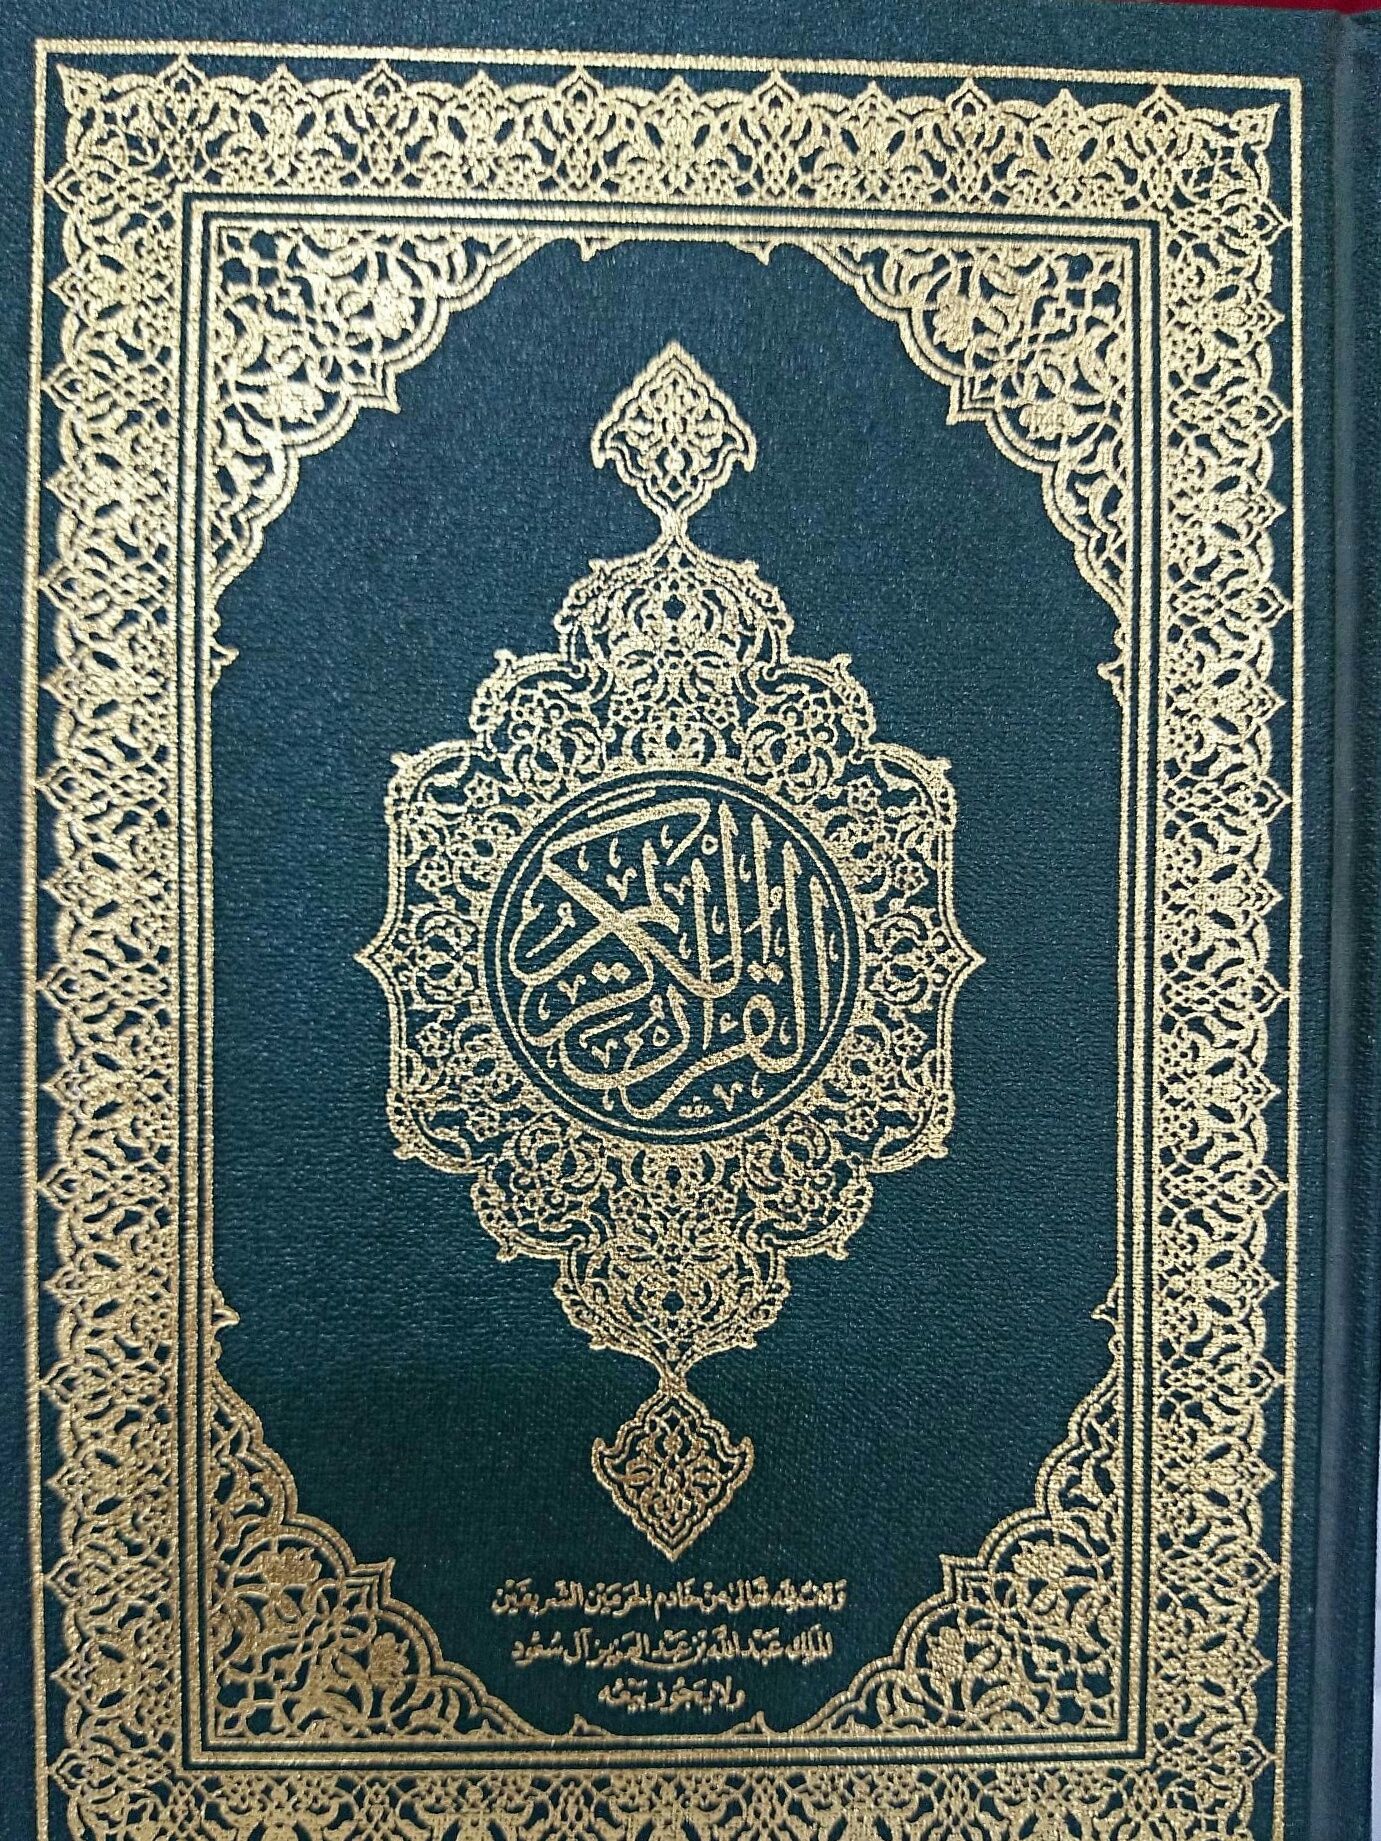 Juz' 3 of the Quran